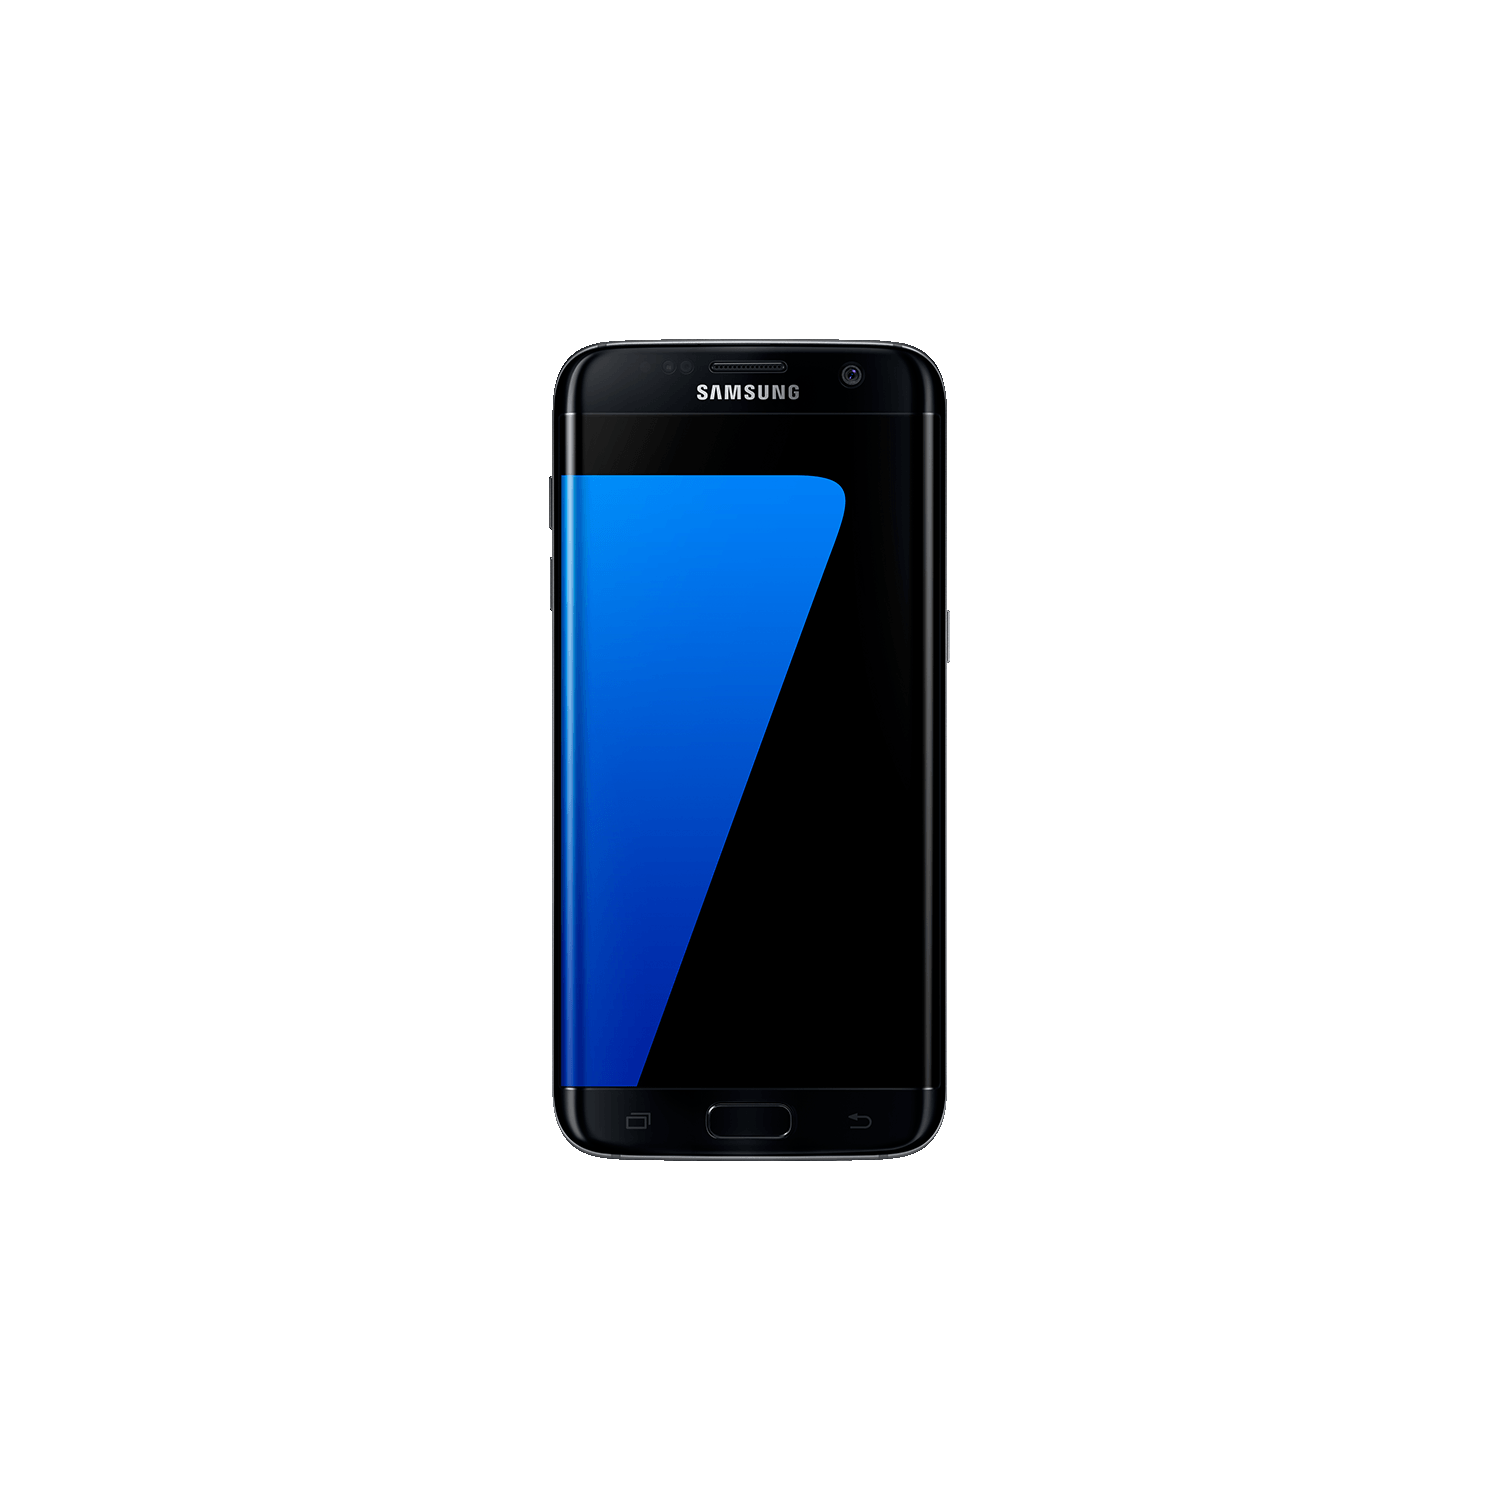 Samsung Galaxy S7 edge 32GB Smartphone - Black Onyx - Unlocked - Open Box